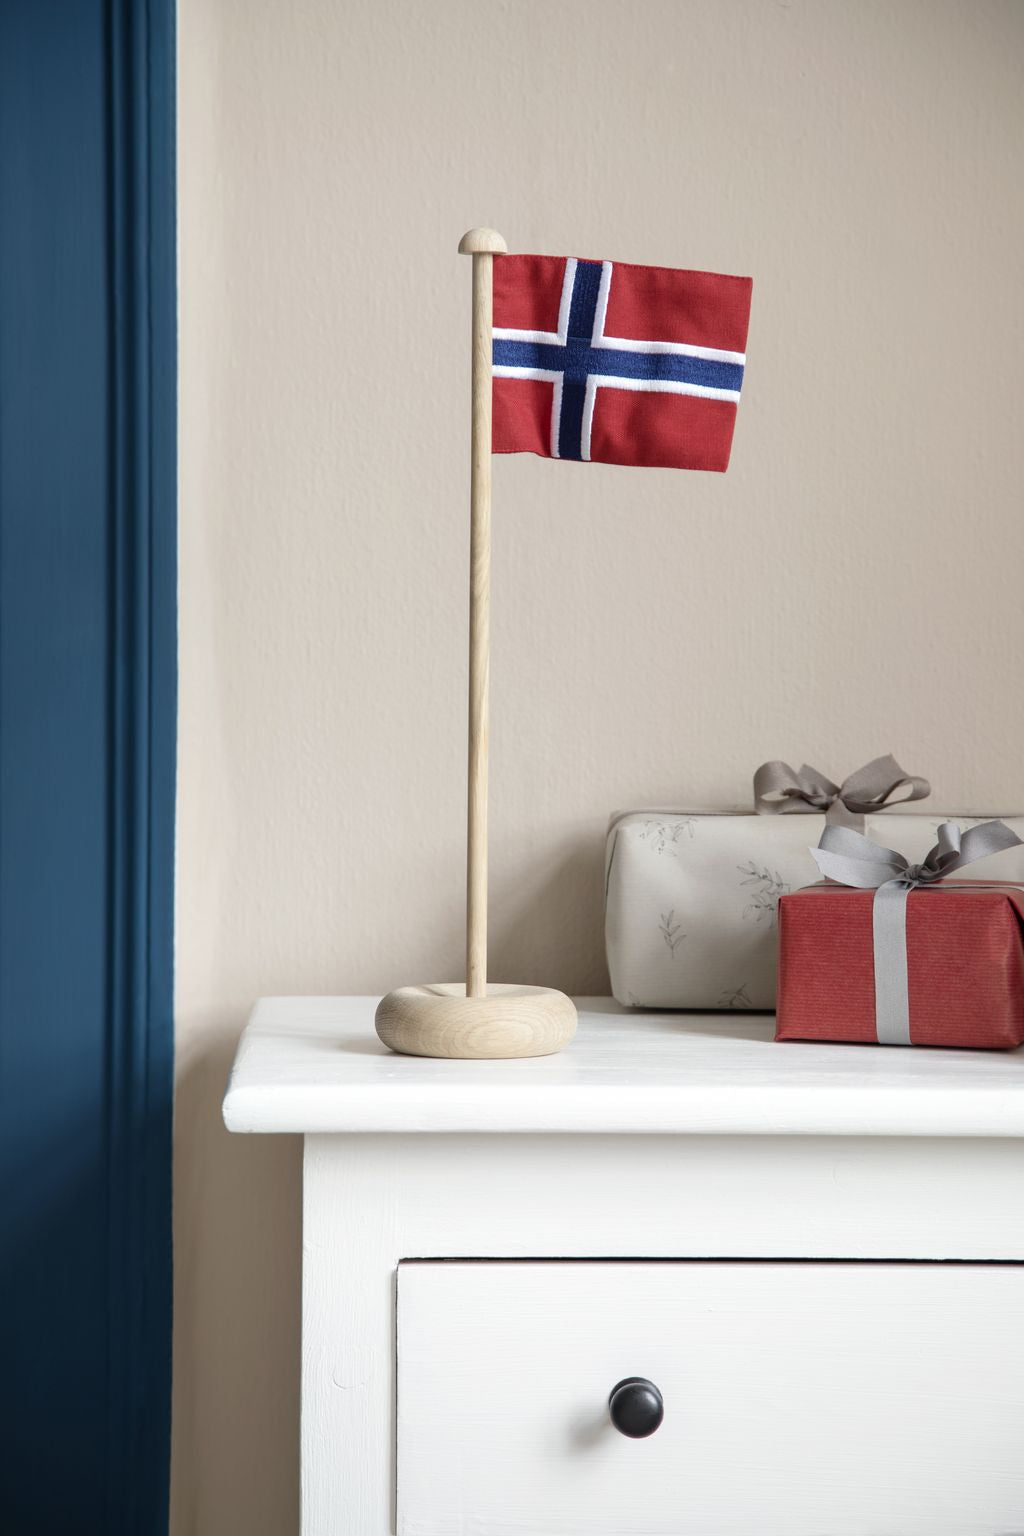 Novoform Design Bordflagga, norska